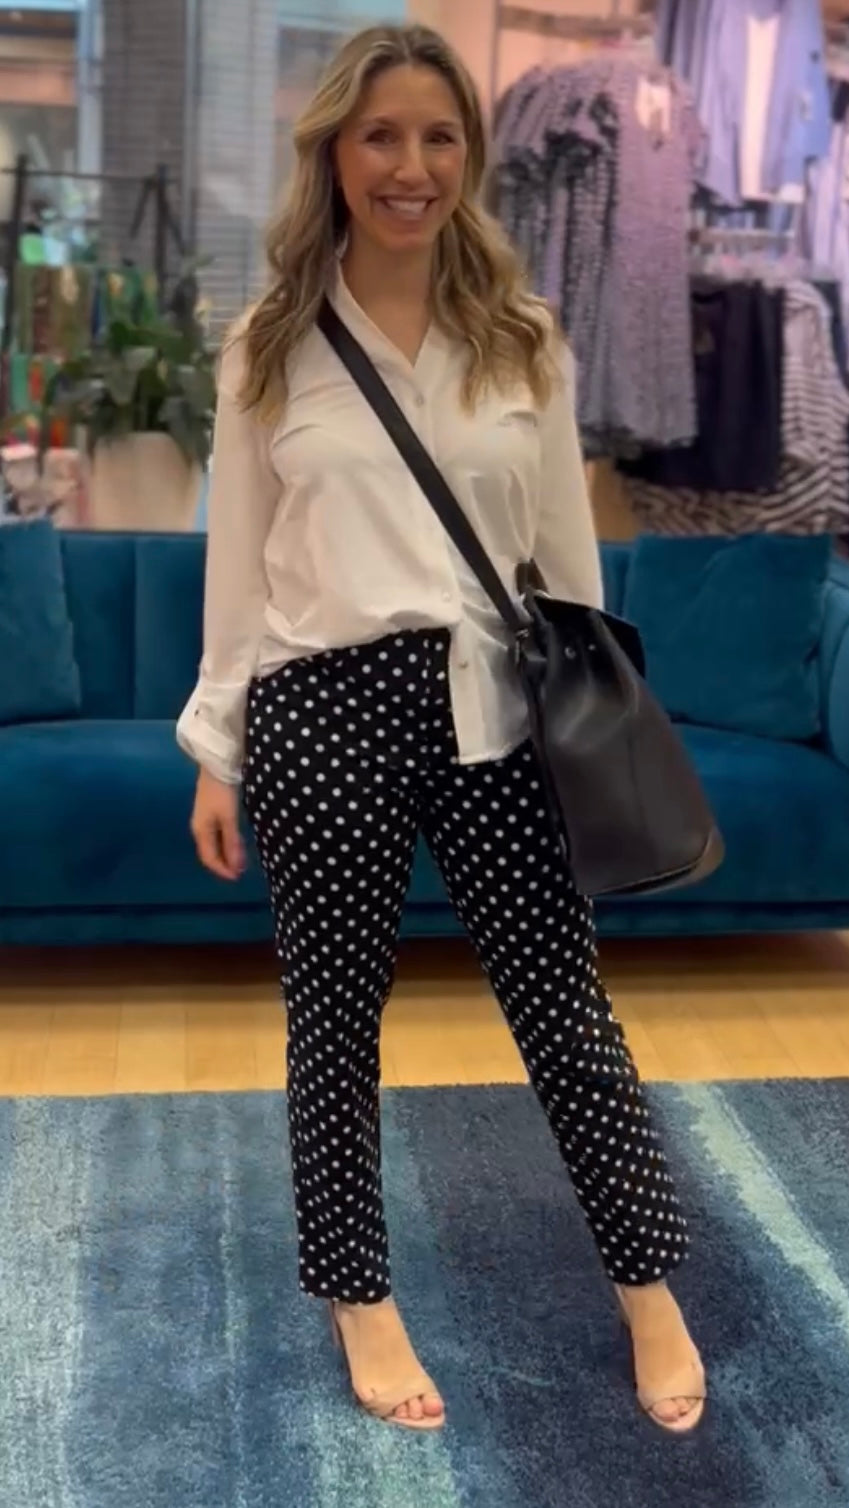 The Bella 7/8 Trouser in Polka Dot – Incandescent